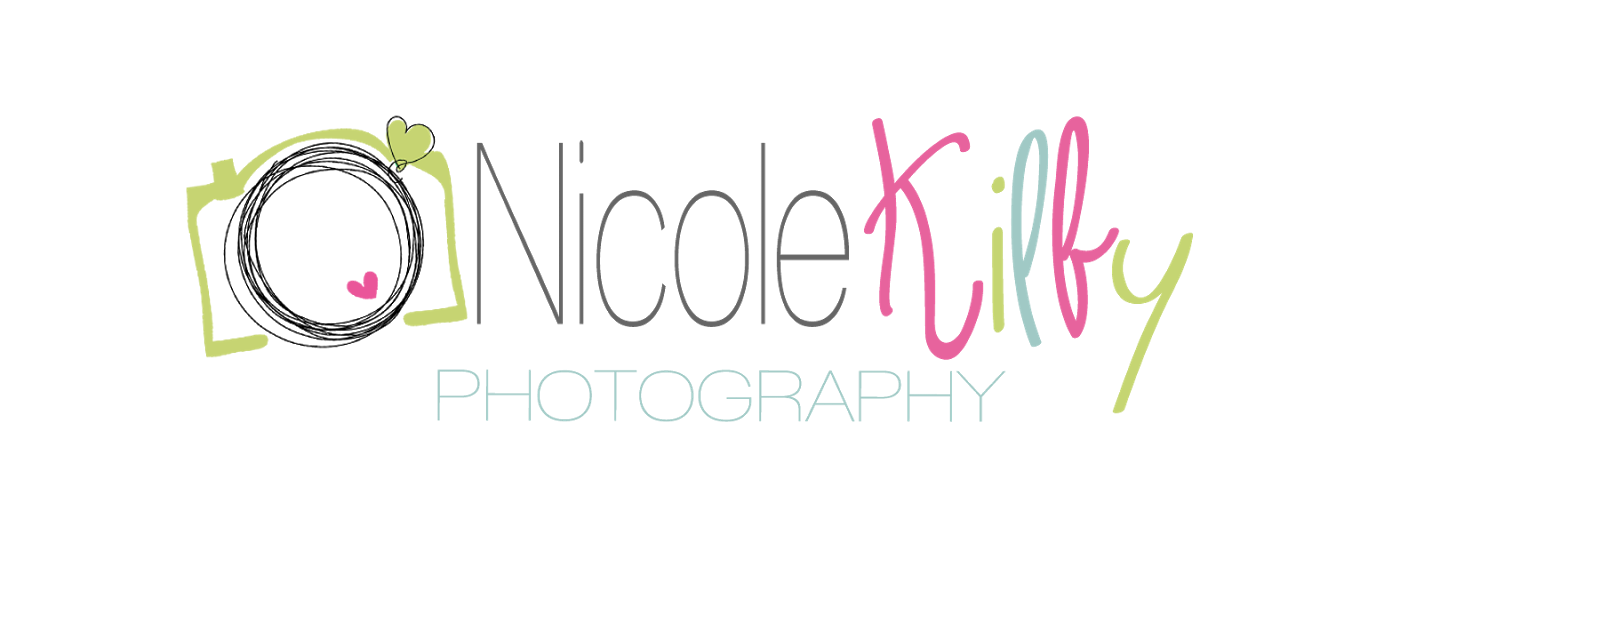                  Nicole Kilby Photography